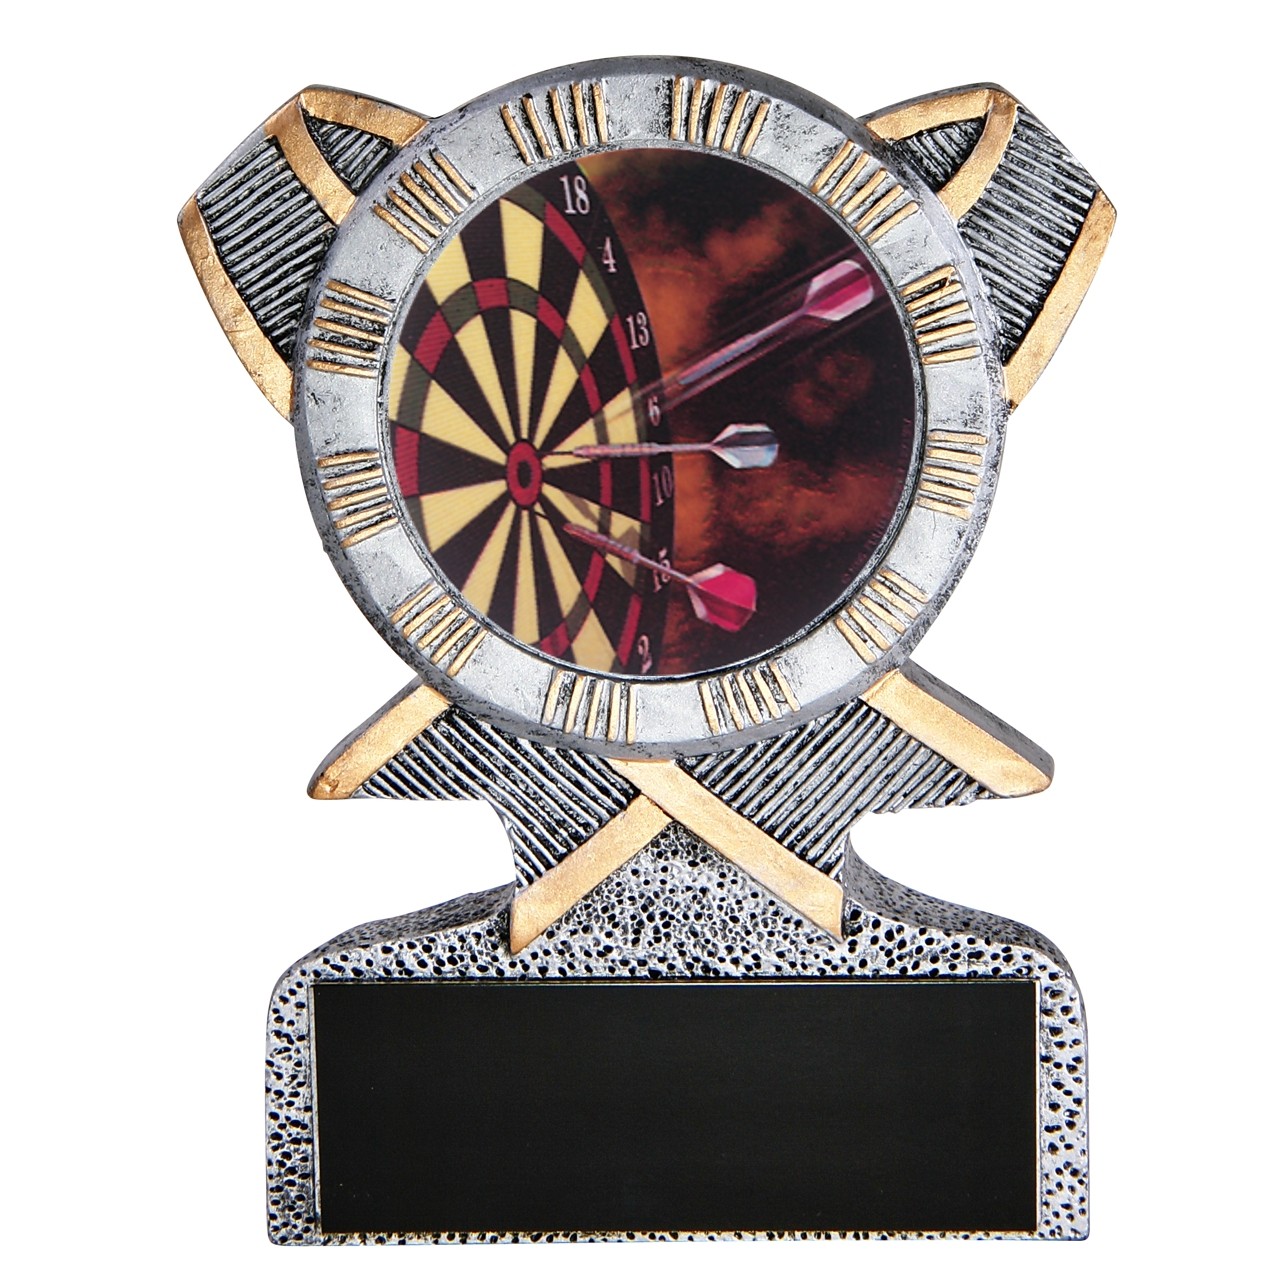 10" Darts and dartboard Trophy Award Free shipping Free Engraving 